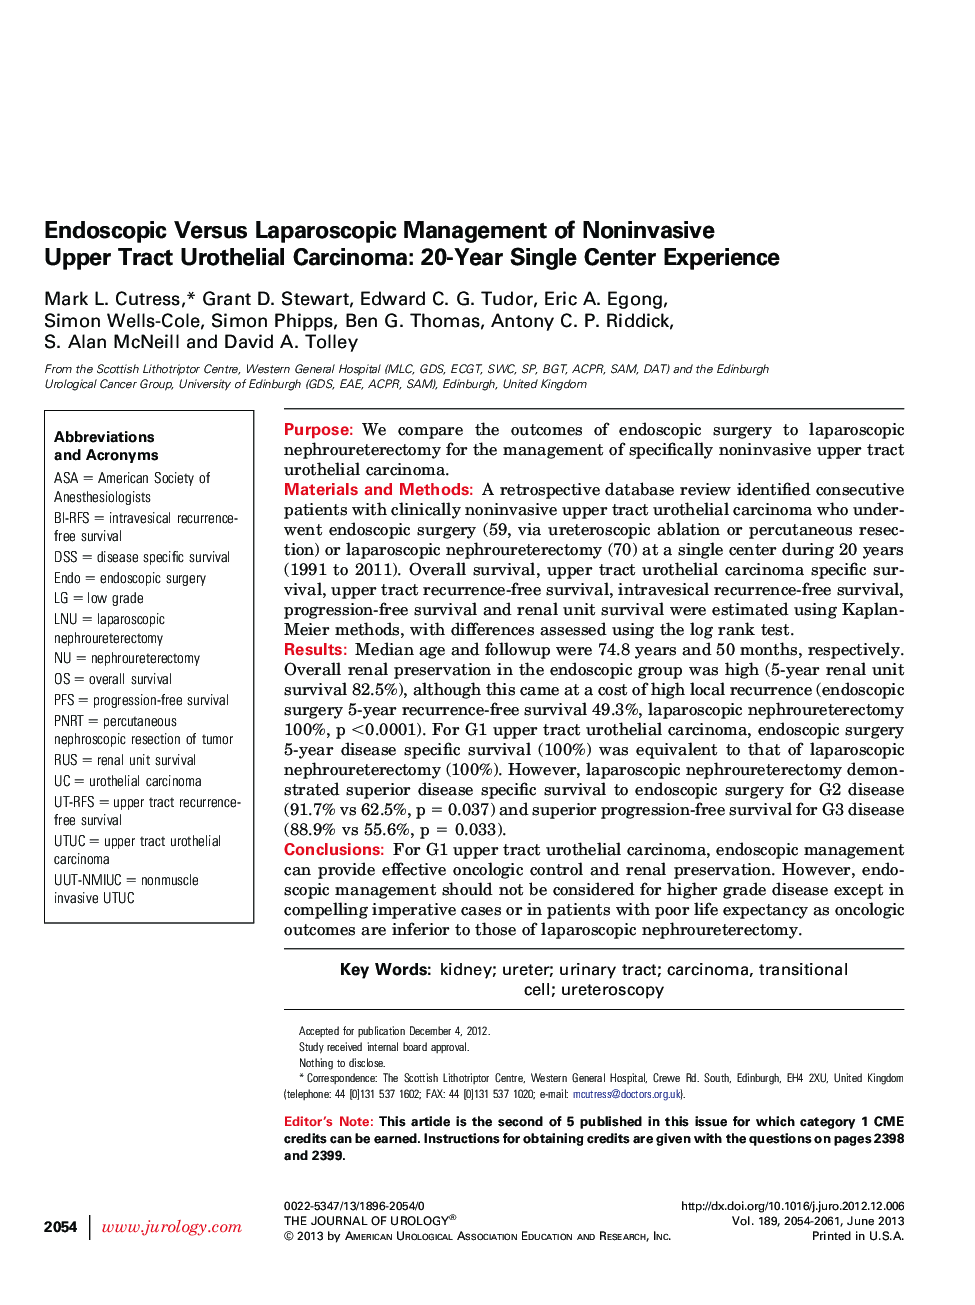 Endoscopic Versus Laparoscopic Management of Noninvasive Upper Tract Urothelial Carcinoma: 20-Year Single Center Experience